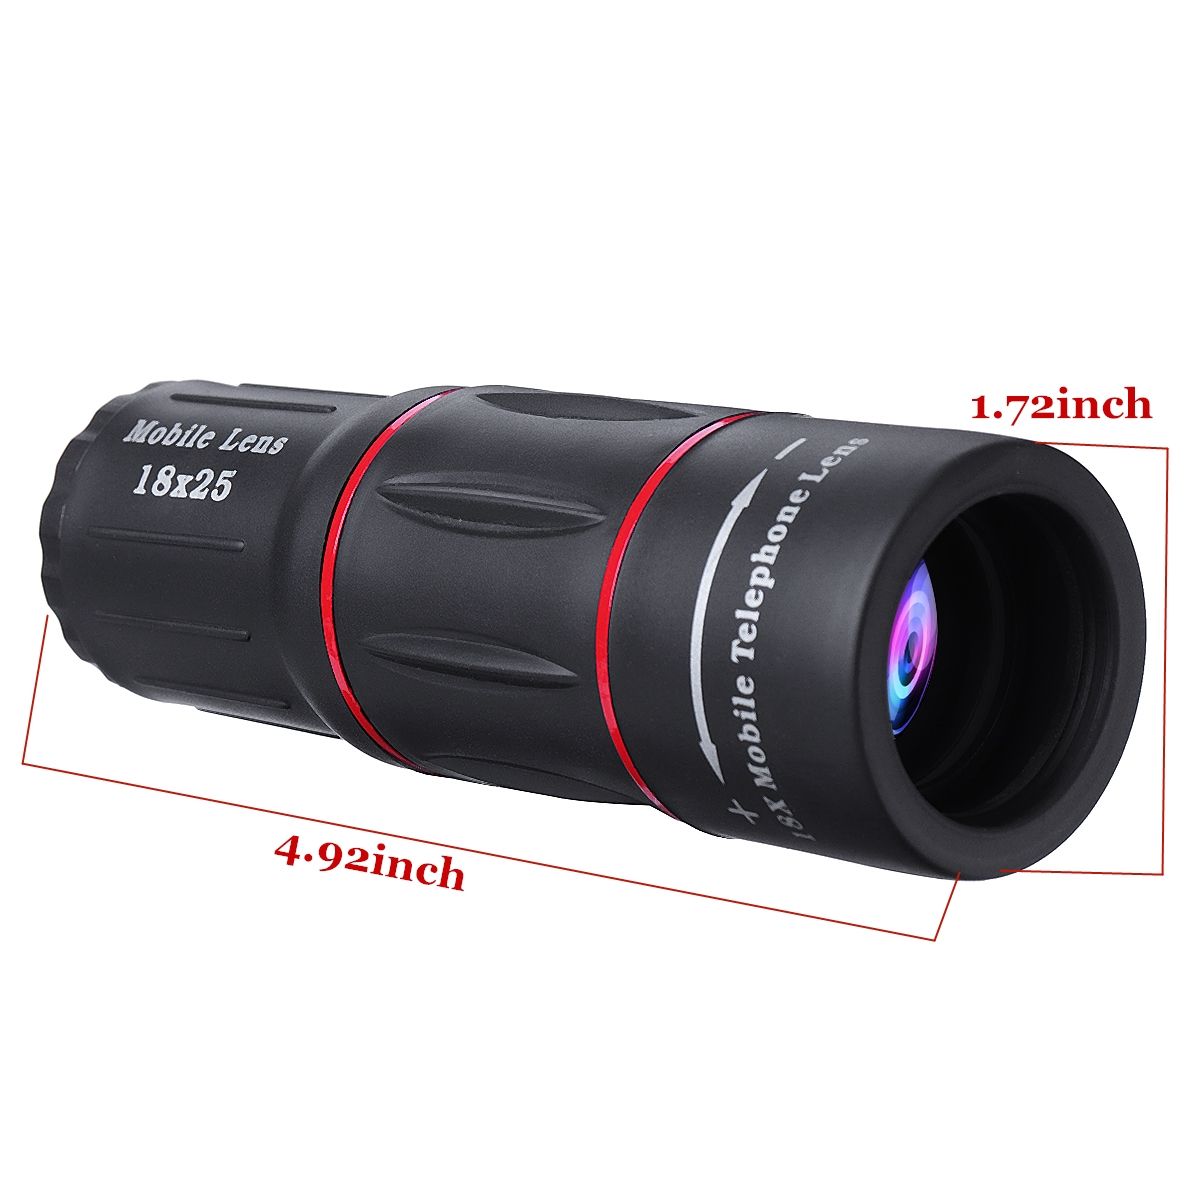 Universal-18X-ZOOM-Telephoto-Lens-with-Phone-Clip-Clamp-Mini-Desktop-Tripod-1410902